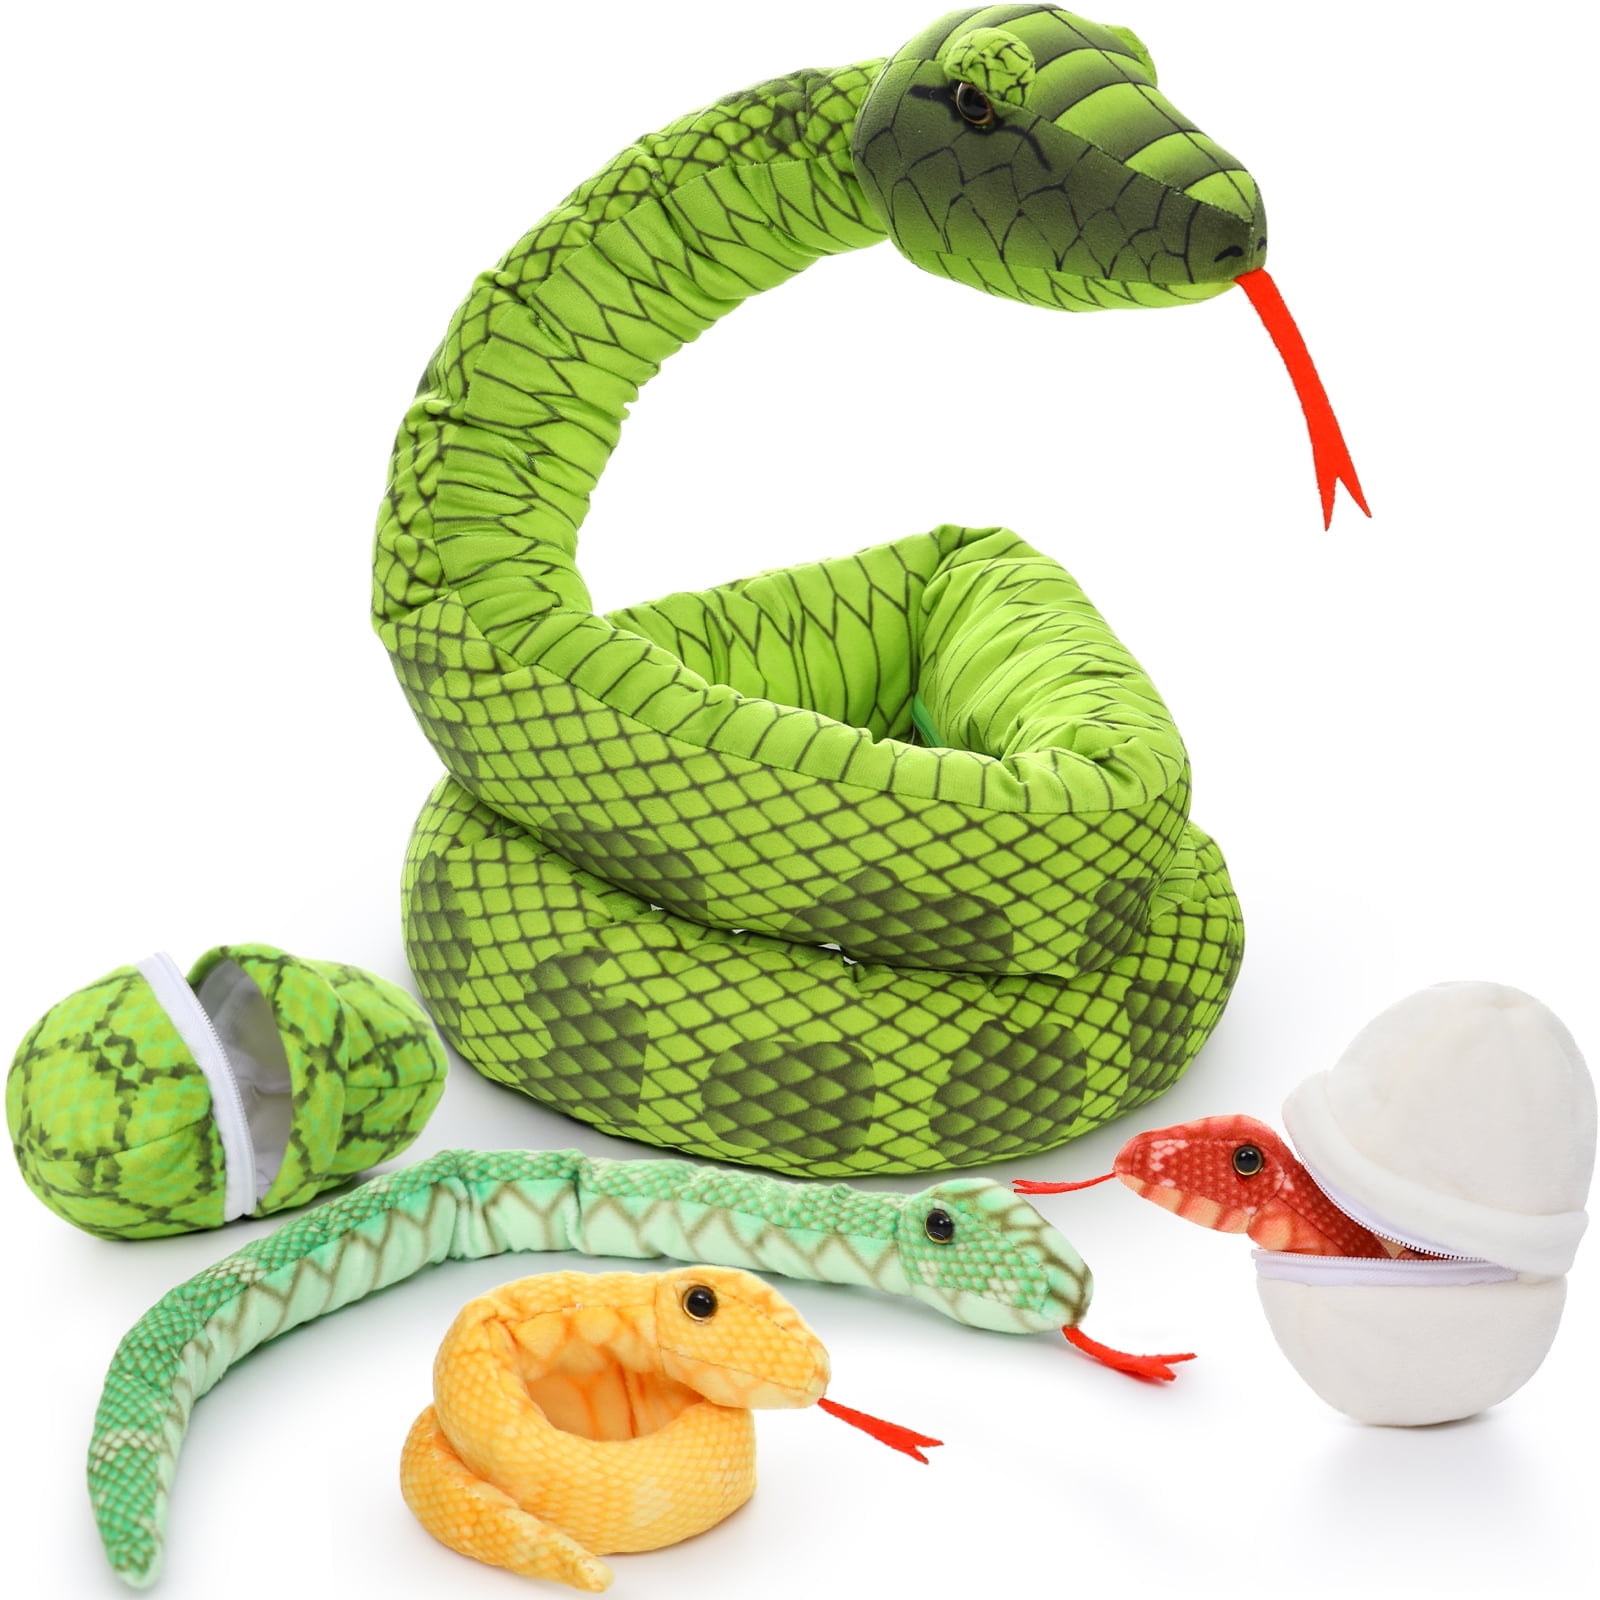 Morismos Giant Realistic Snake Stuffed